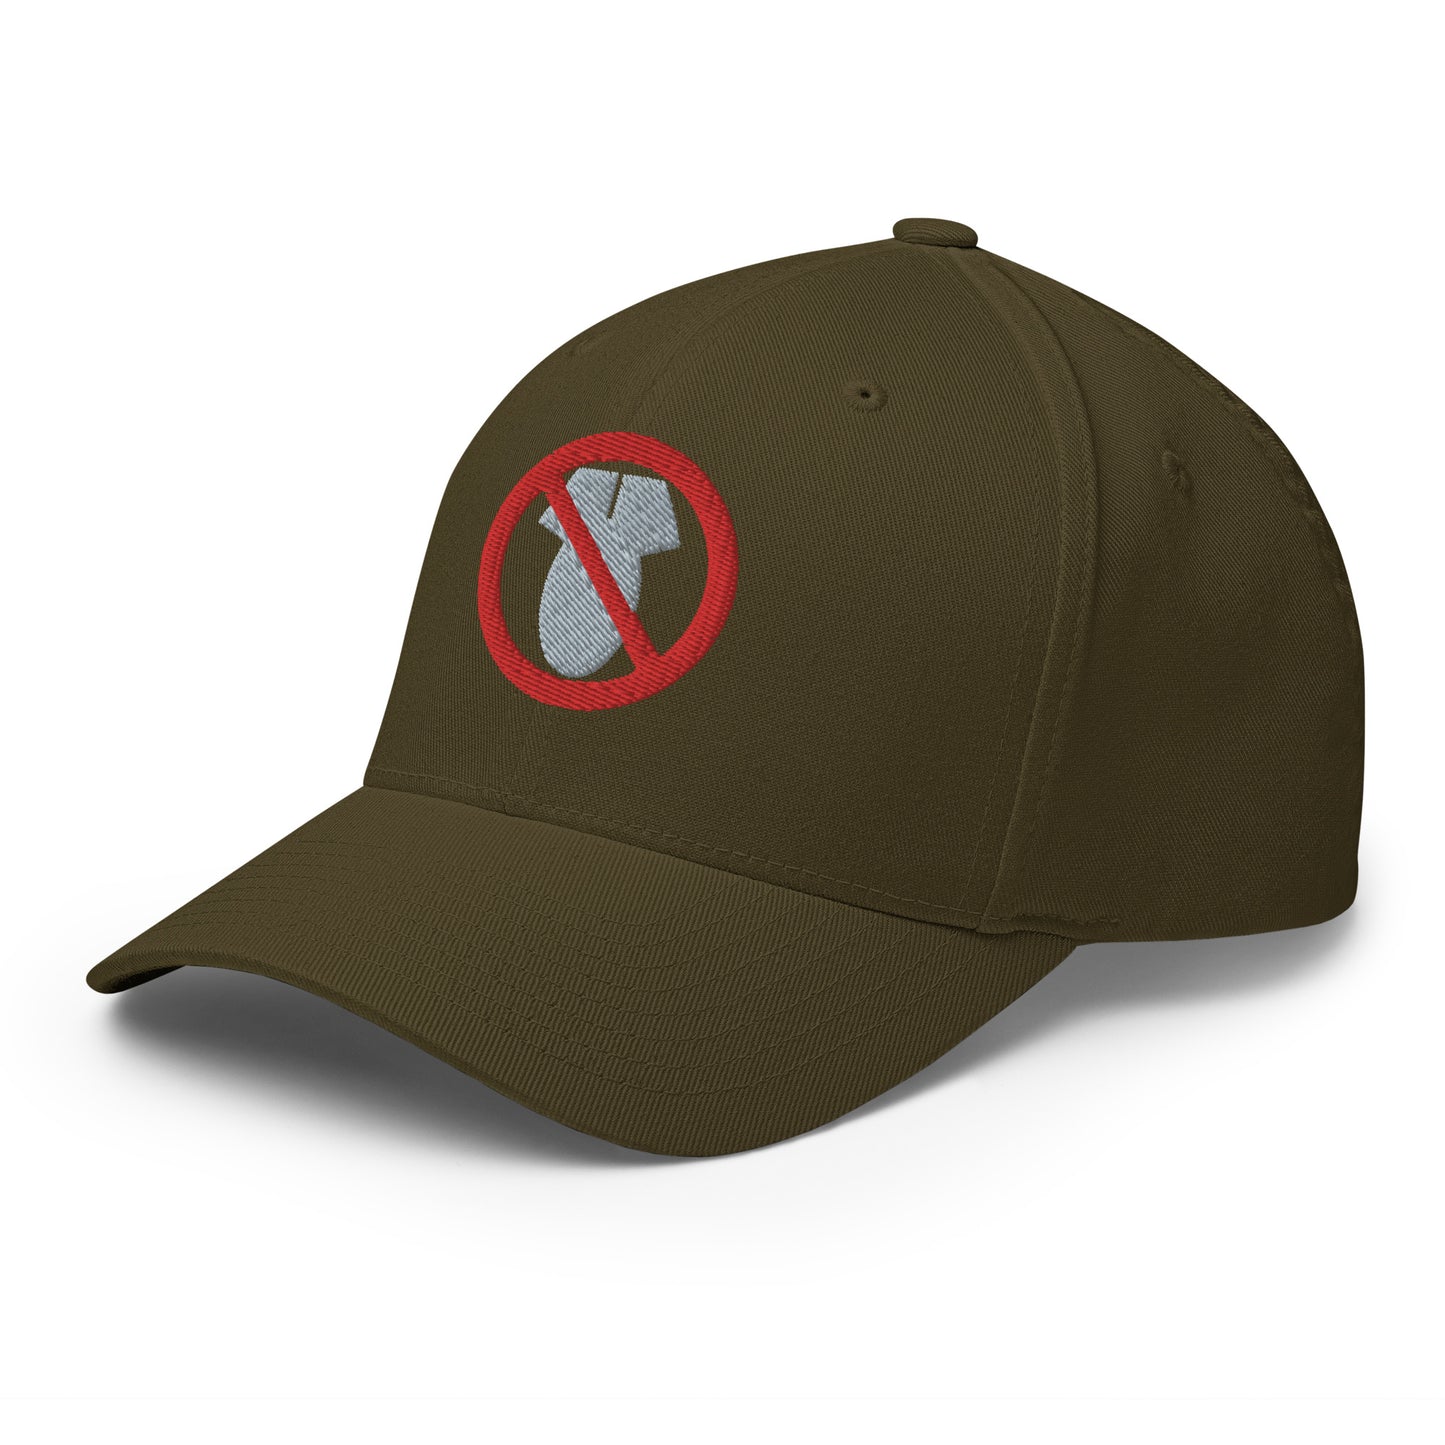 Baseball Cap with No Bombs Symbol